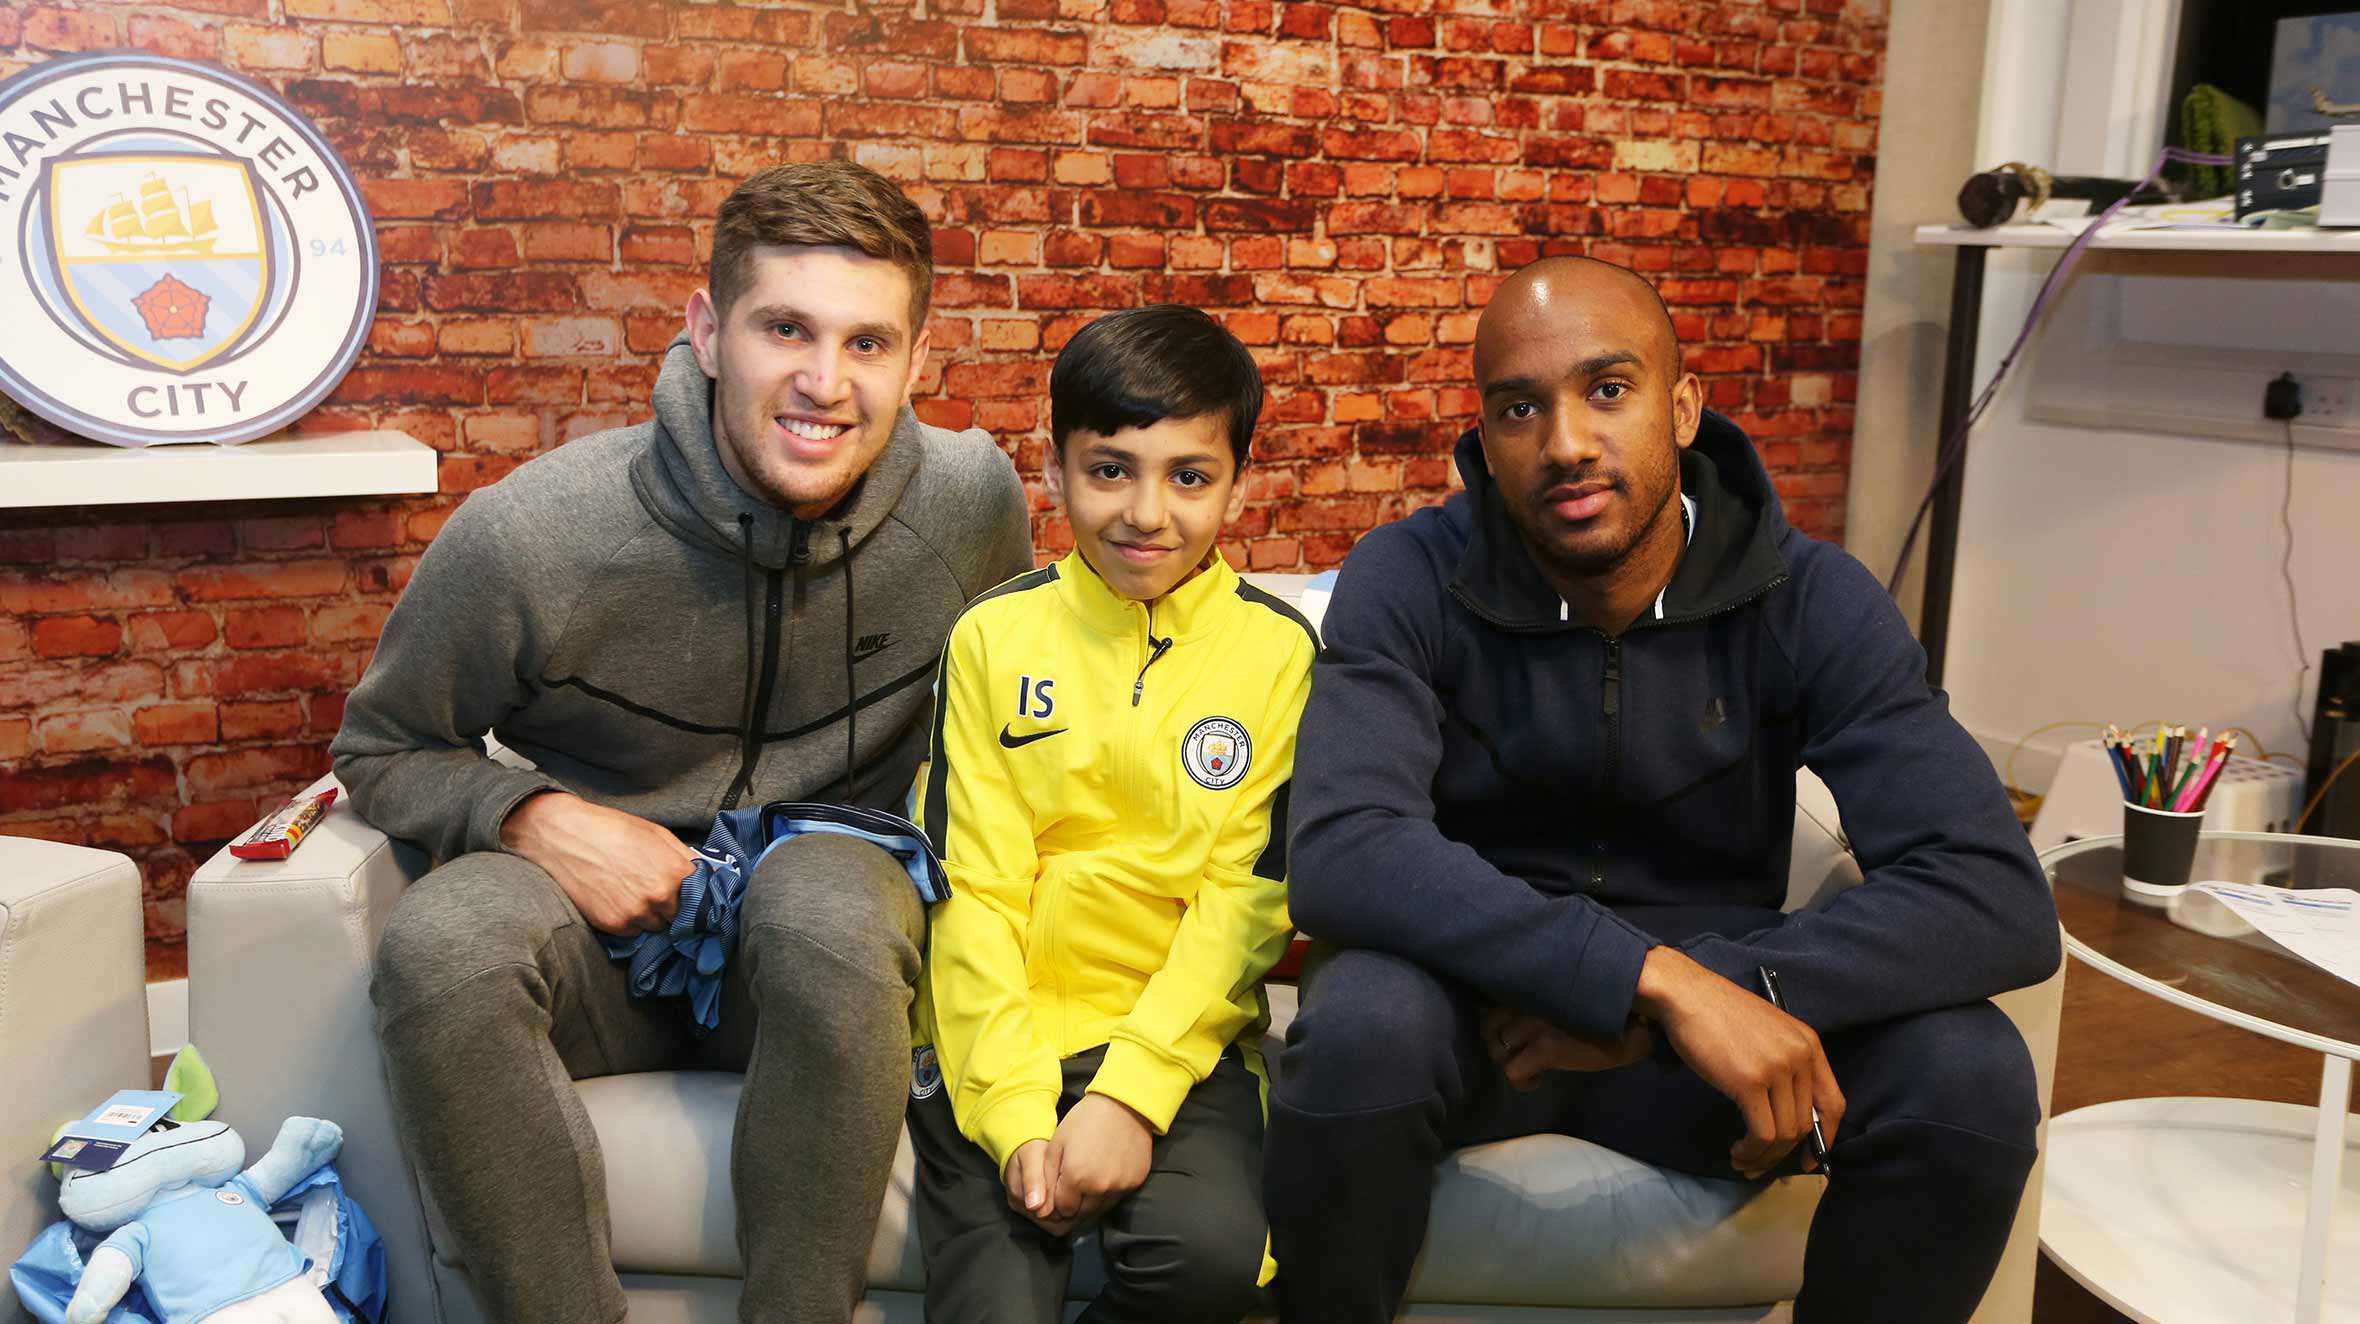 Idris meeting Man City players, John Stones and Fabian Delph